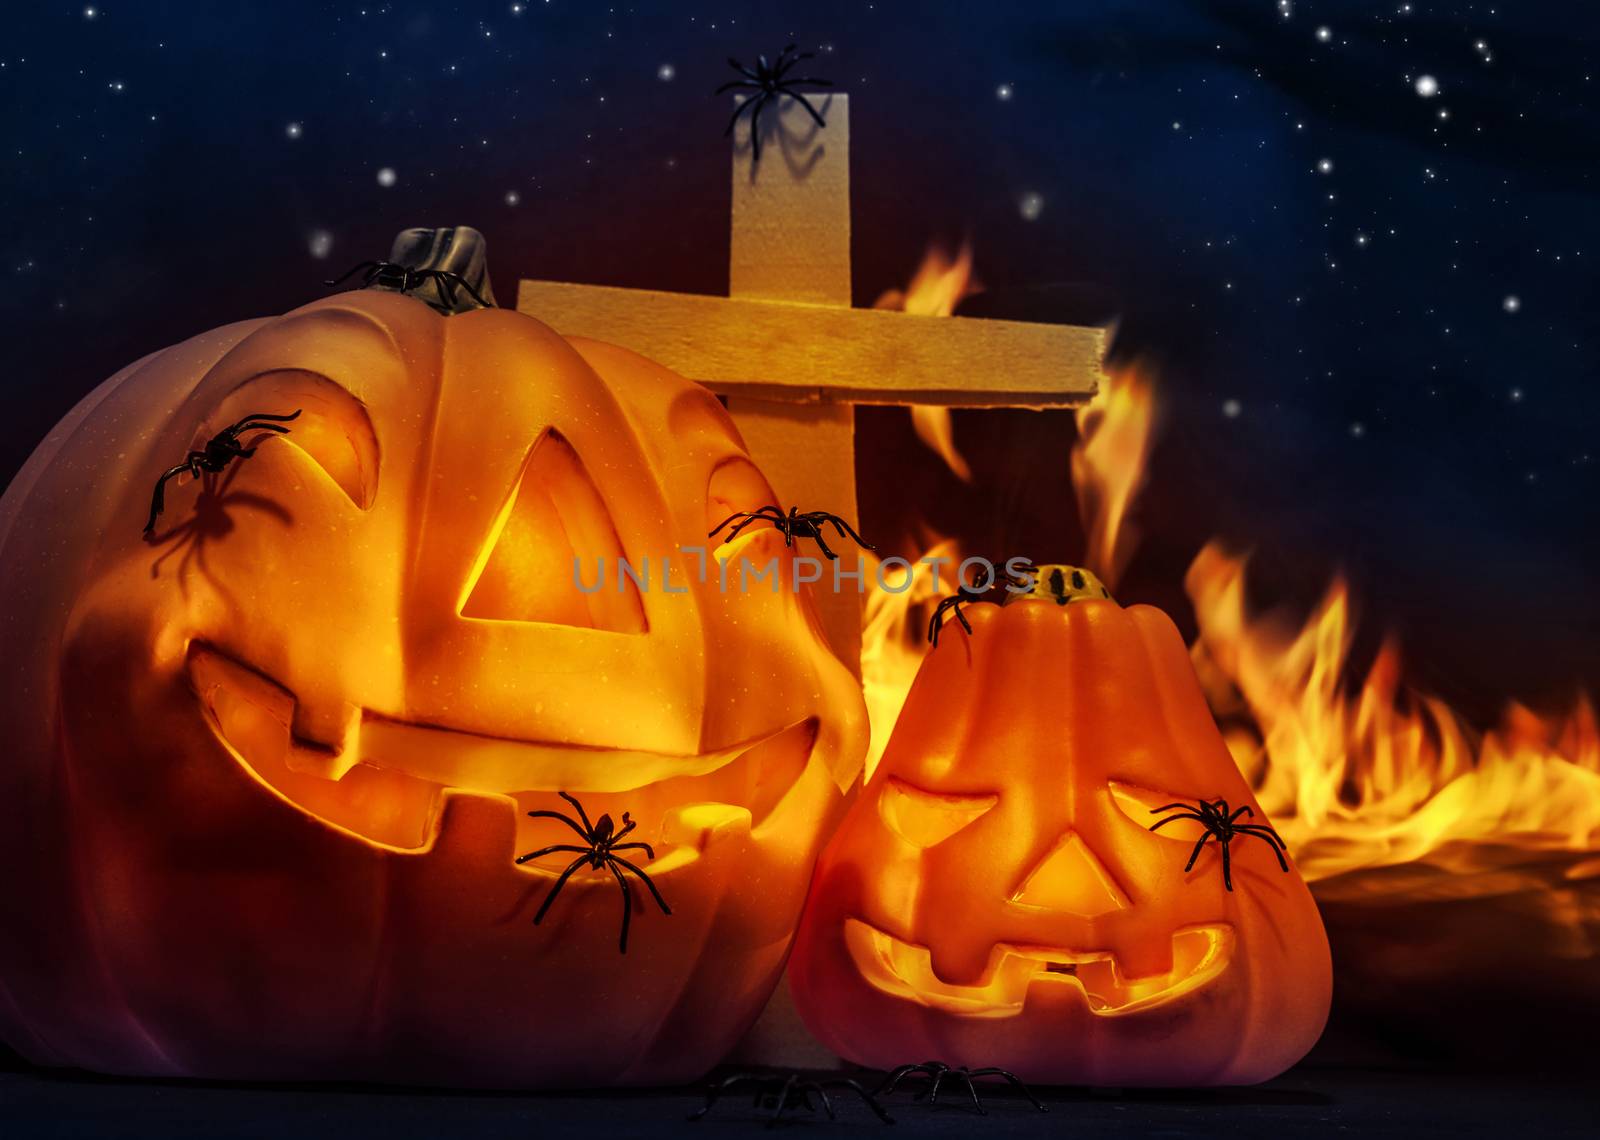 Creepy Halloween night by Anna_Omelchenko